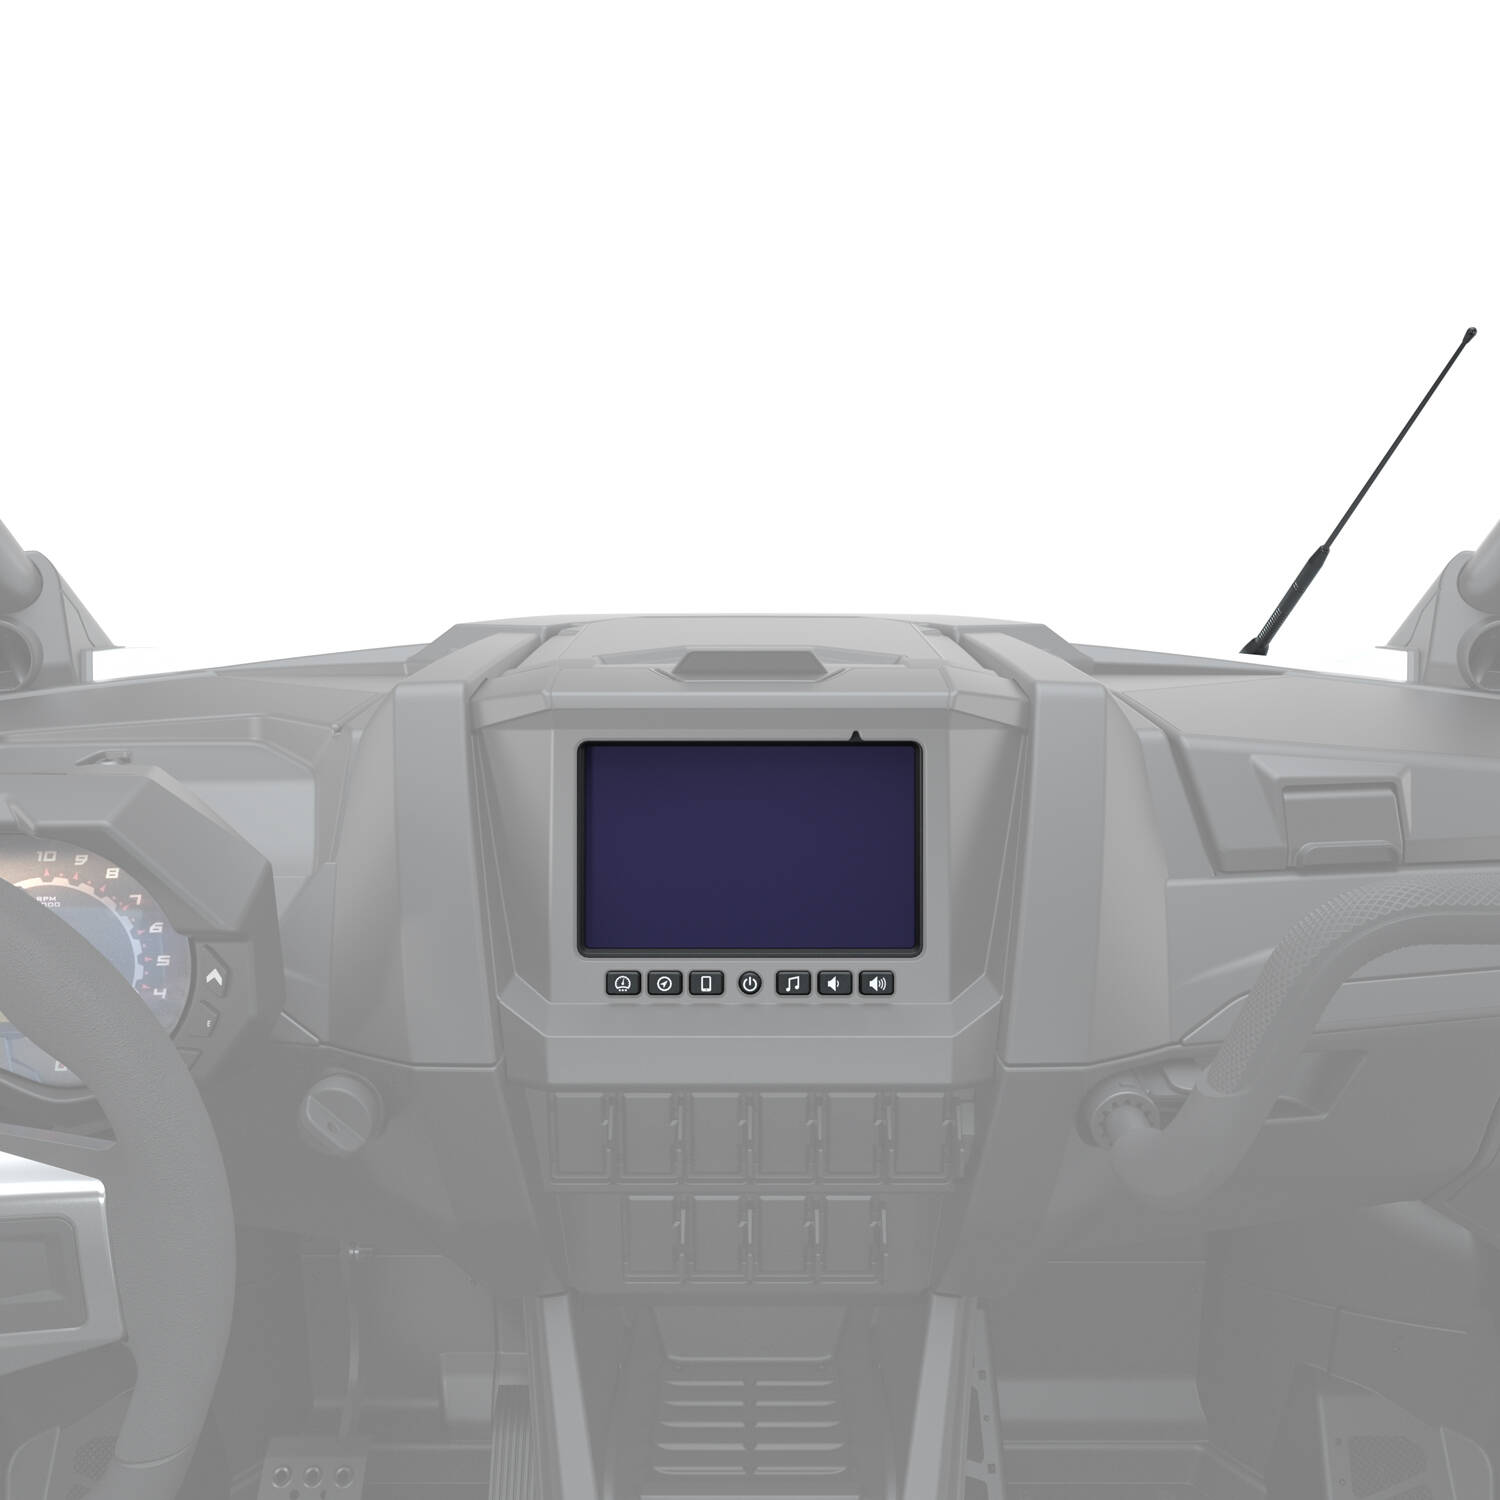 Polaris 7” Ride Command Display 